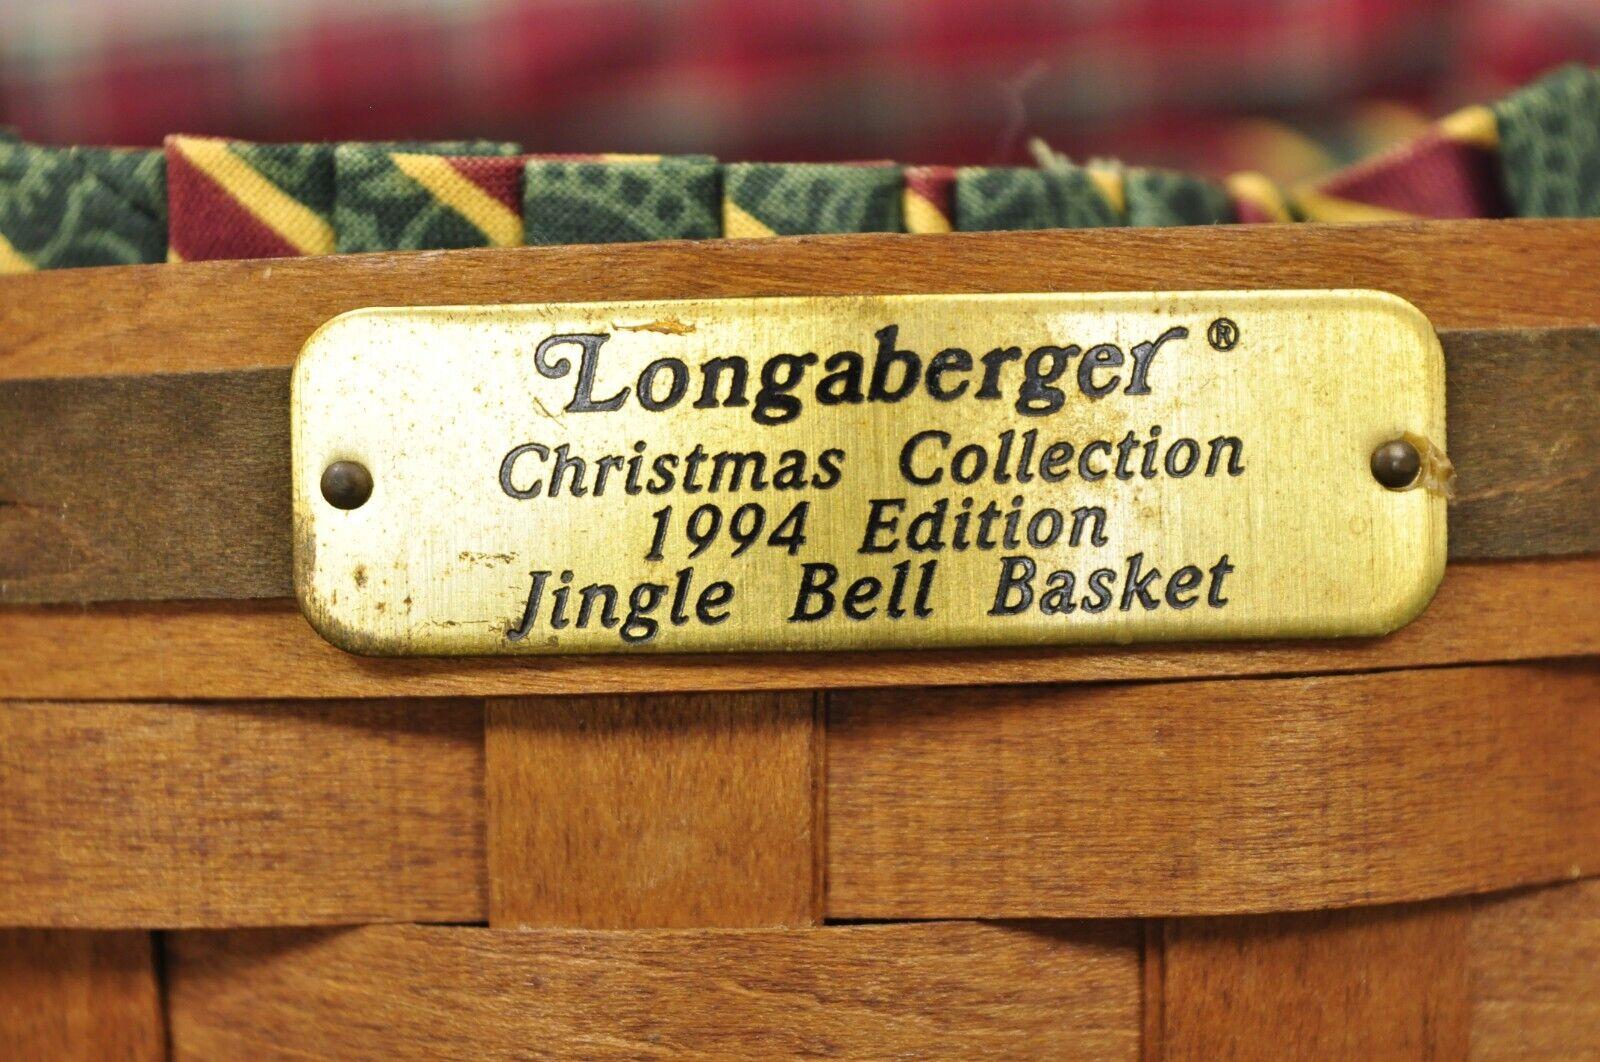 Fin du 20e siècle Panier Longaberger 1994 Jingle Bell Basket 1995 Dresde 1988 Panier - 3 pièces en vente